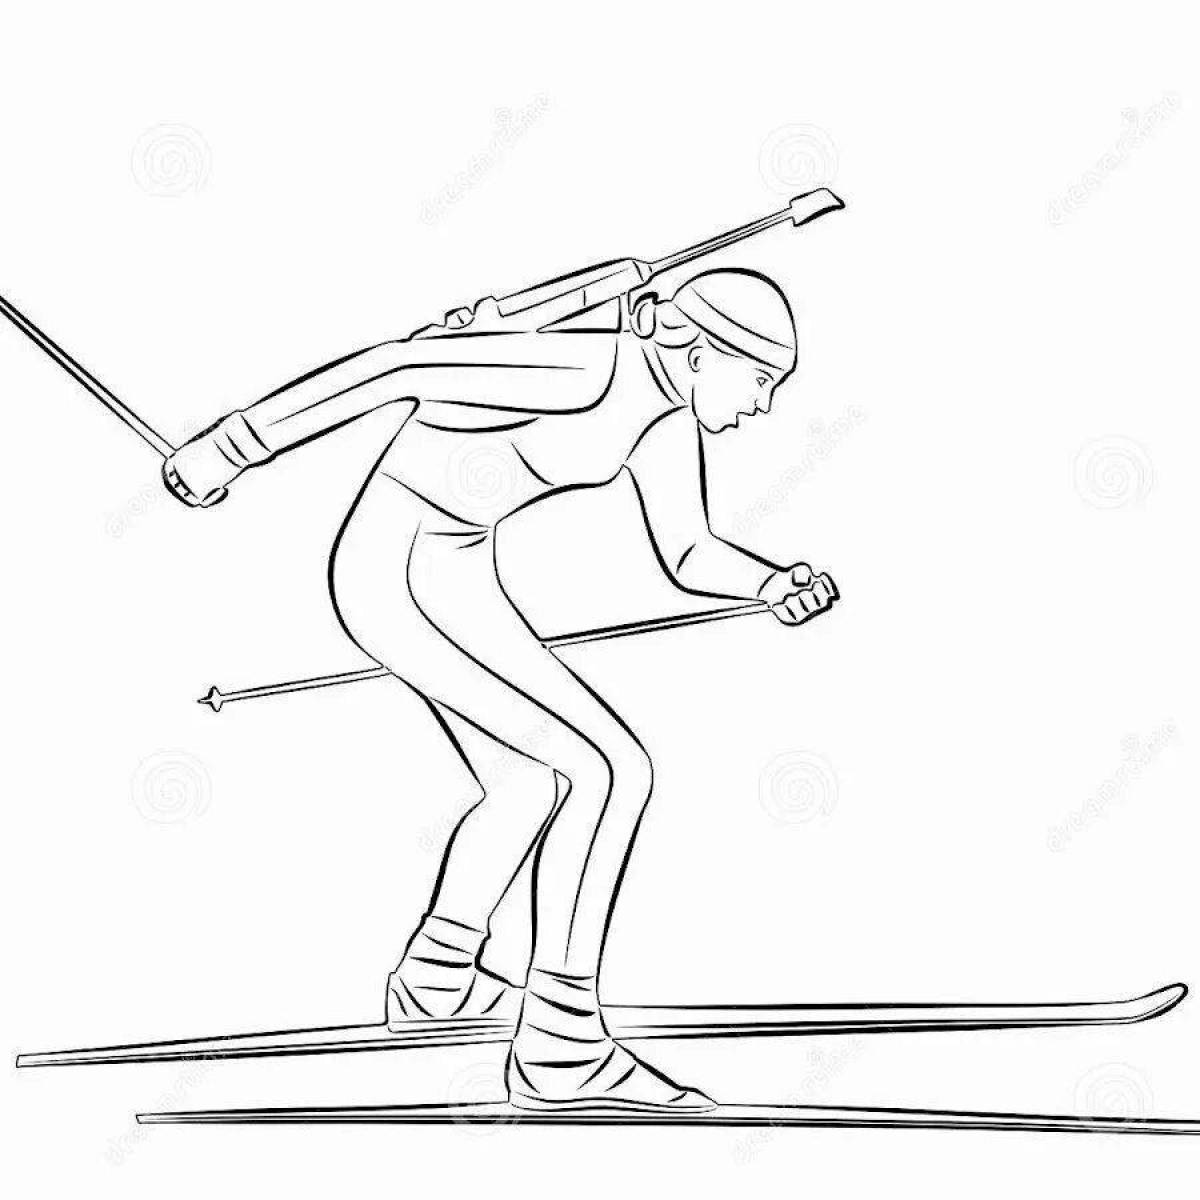 Cross-country skiing #2